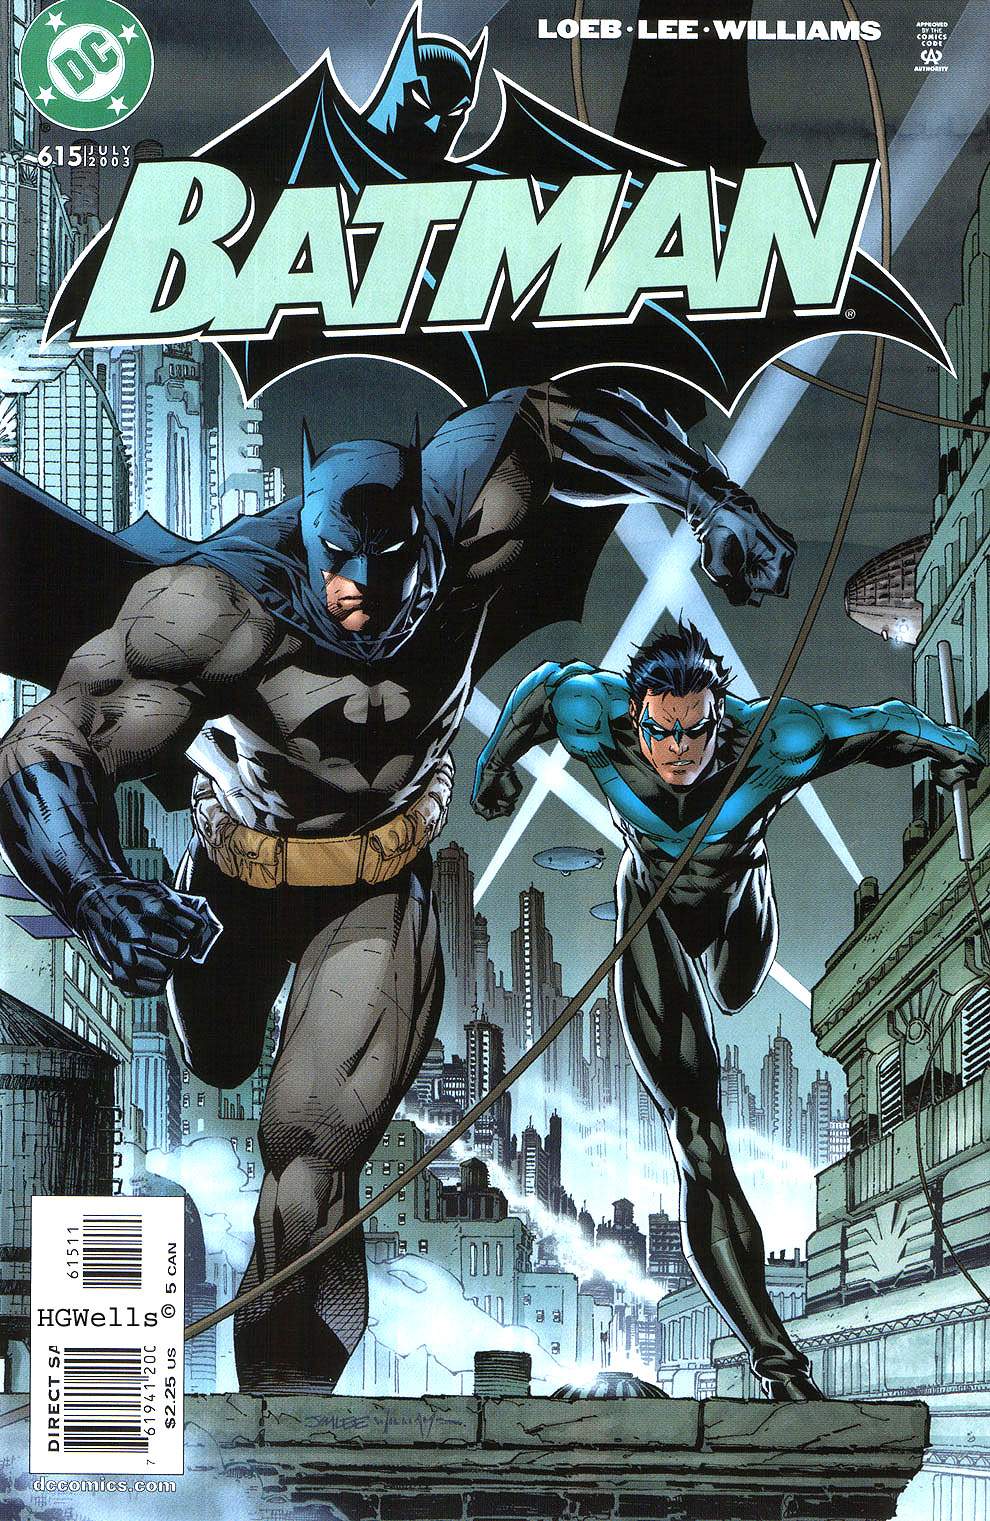 Batman Hush Issue 8 | Read Batman Hush Issue 8 comic online in high  quality. Read Full Comic online for free - Read comics online in high  quality .|